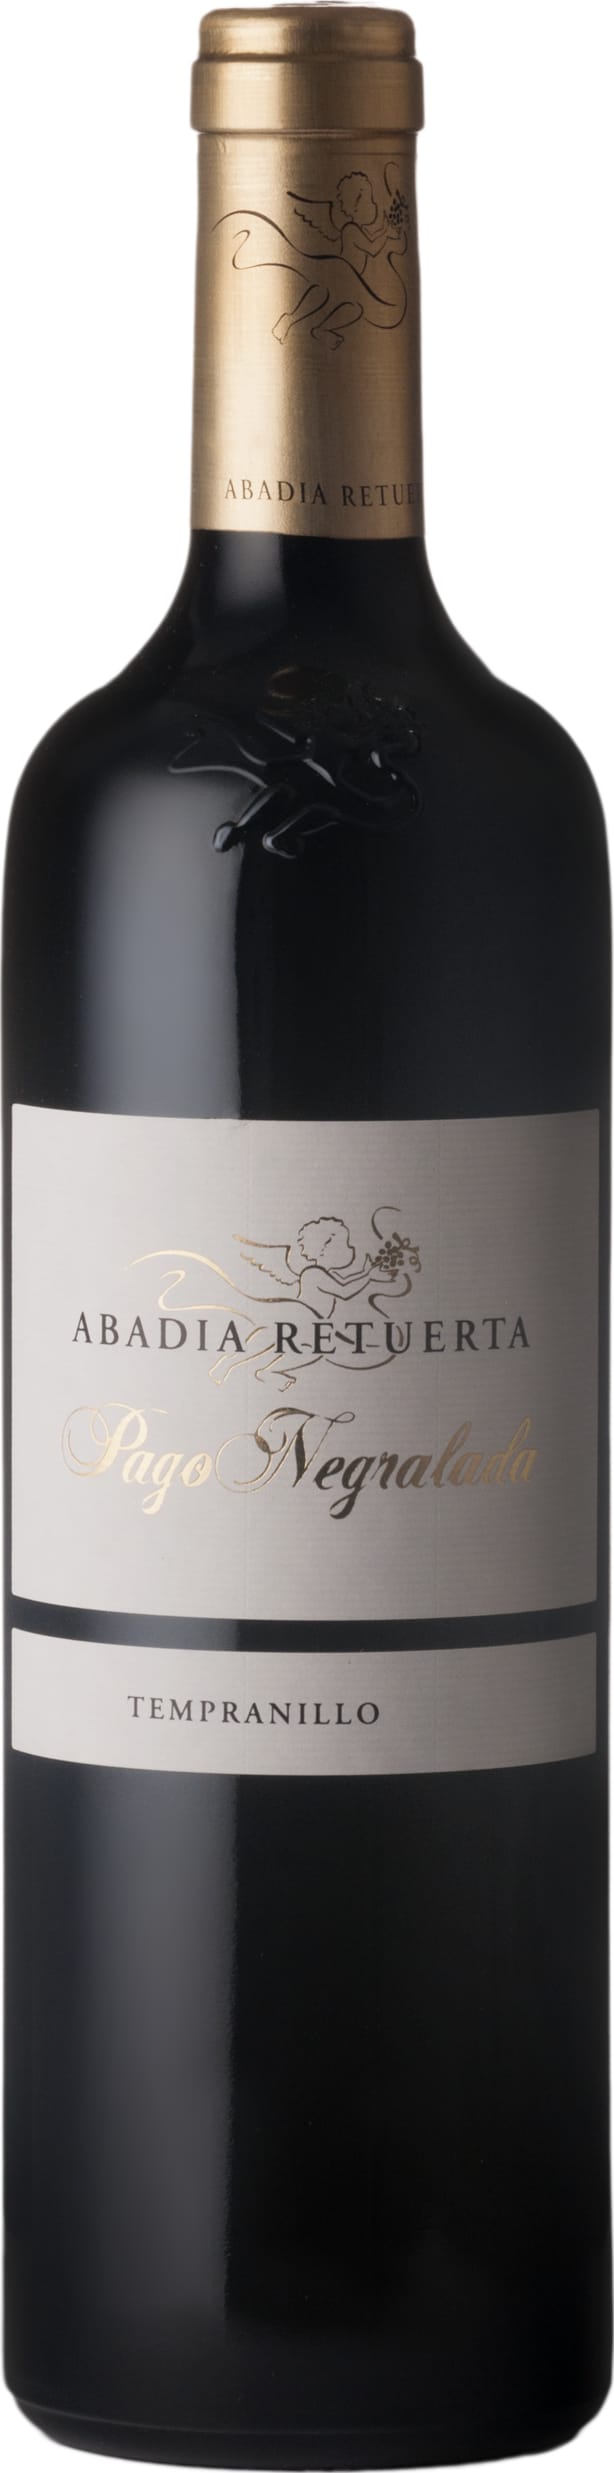 Abadia Retuerta Pago Negralada Tempranillo 2012 75cl - Buy Abadia Retuerta Wines from GREAT WINES DIRECT wine shop